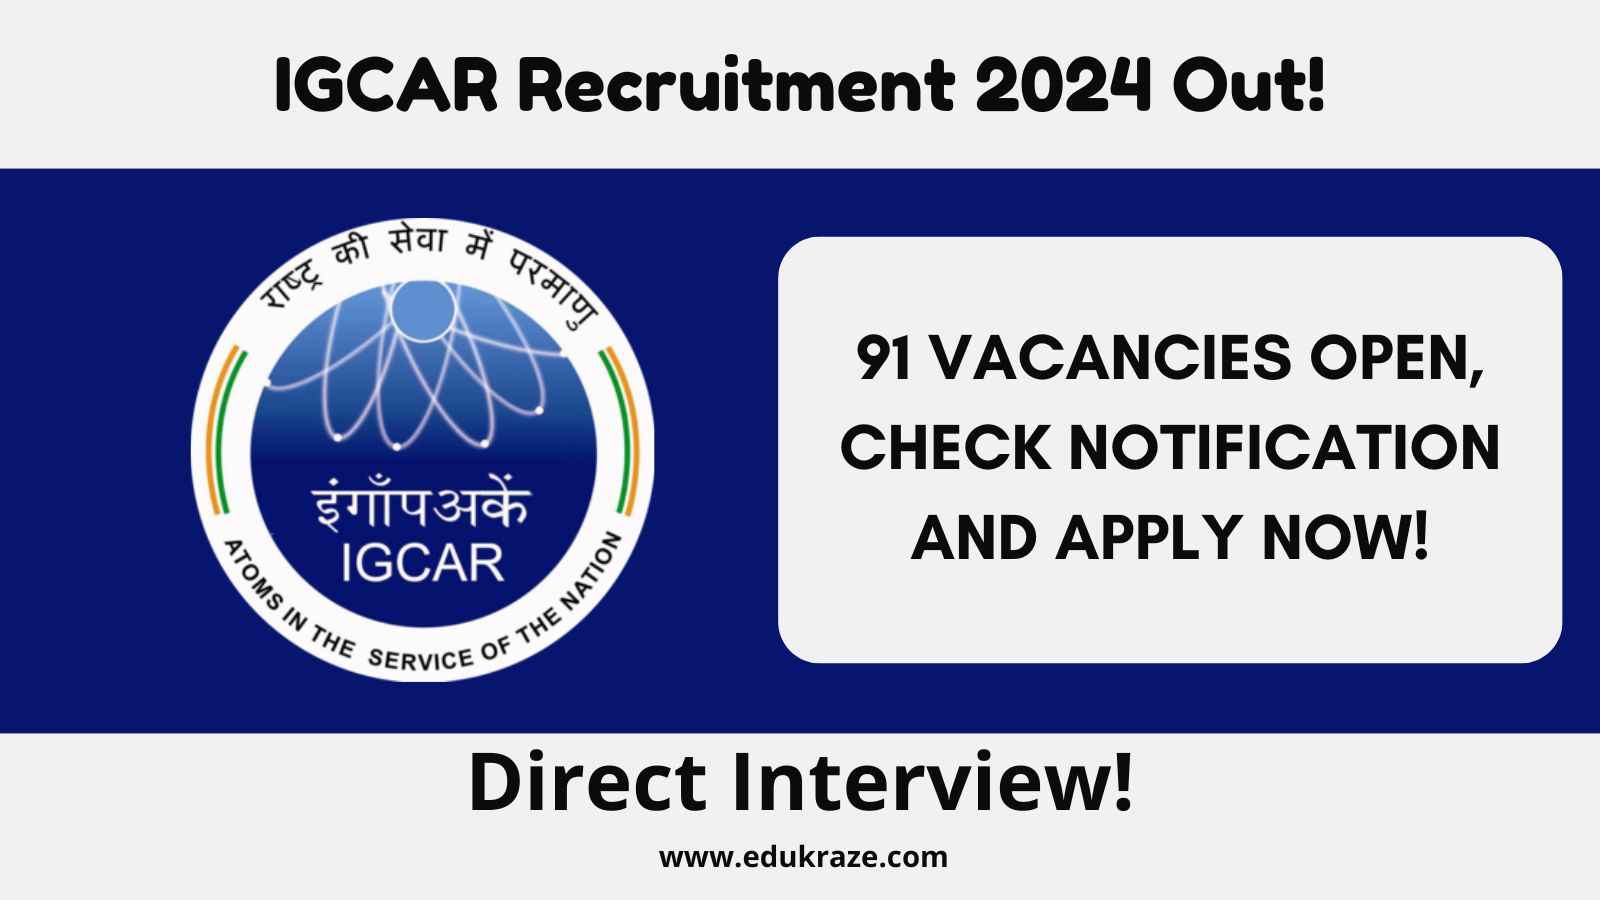 IGCAR Recruitment 2024: Multiple Vacancies Announced via Direct Interview!